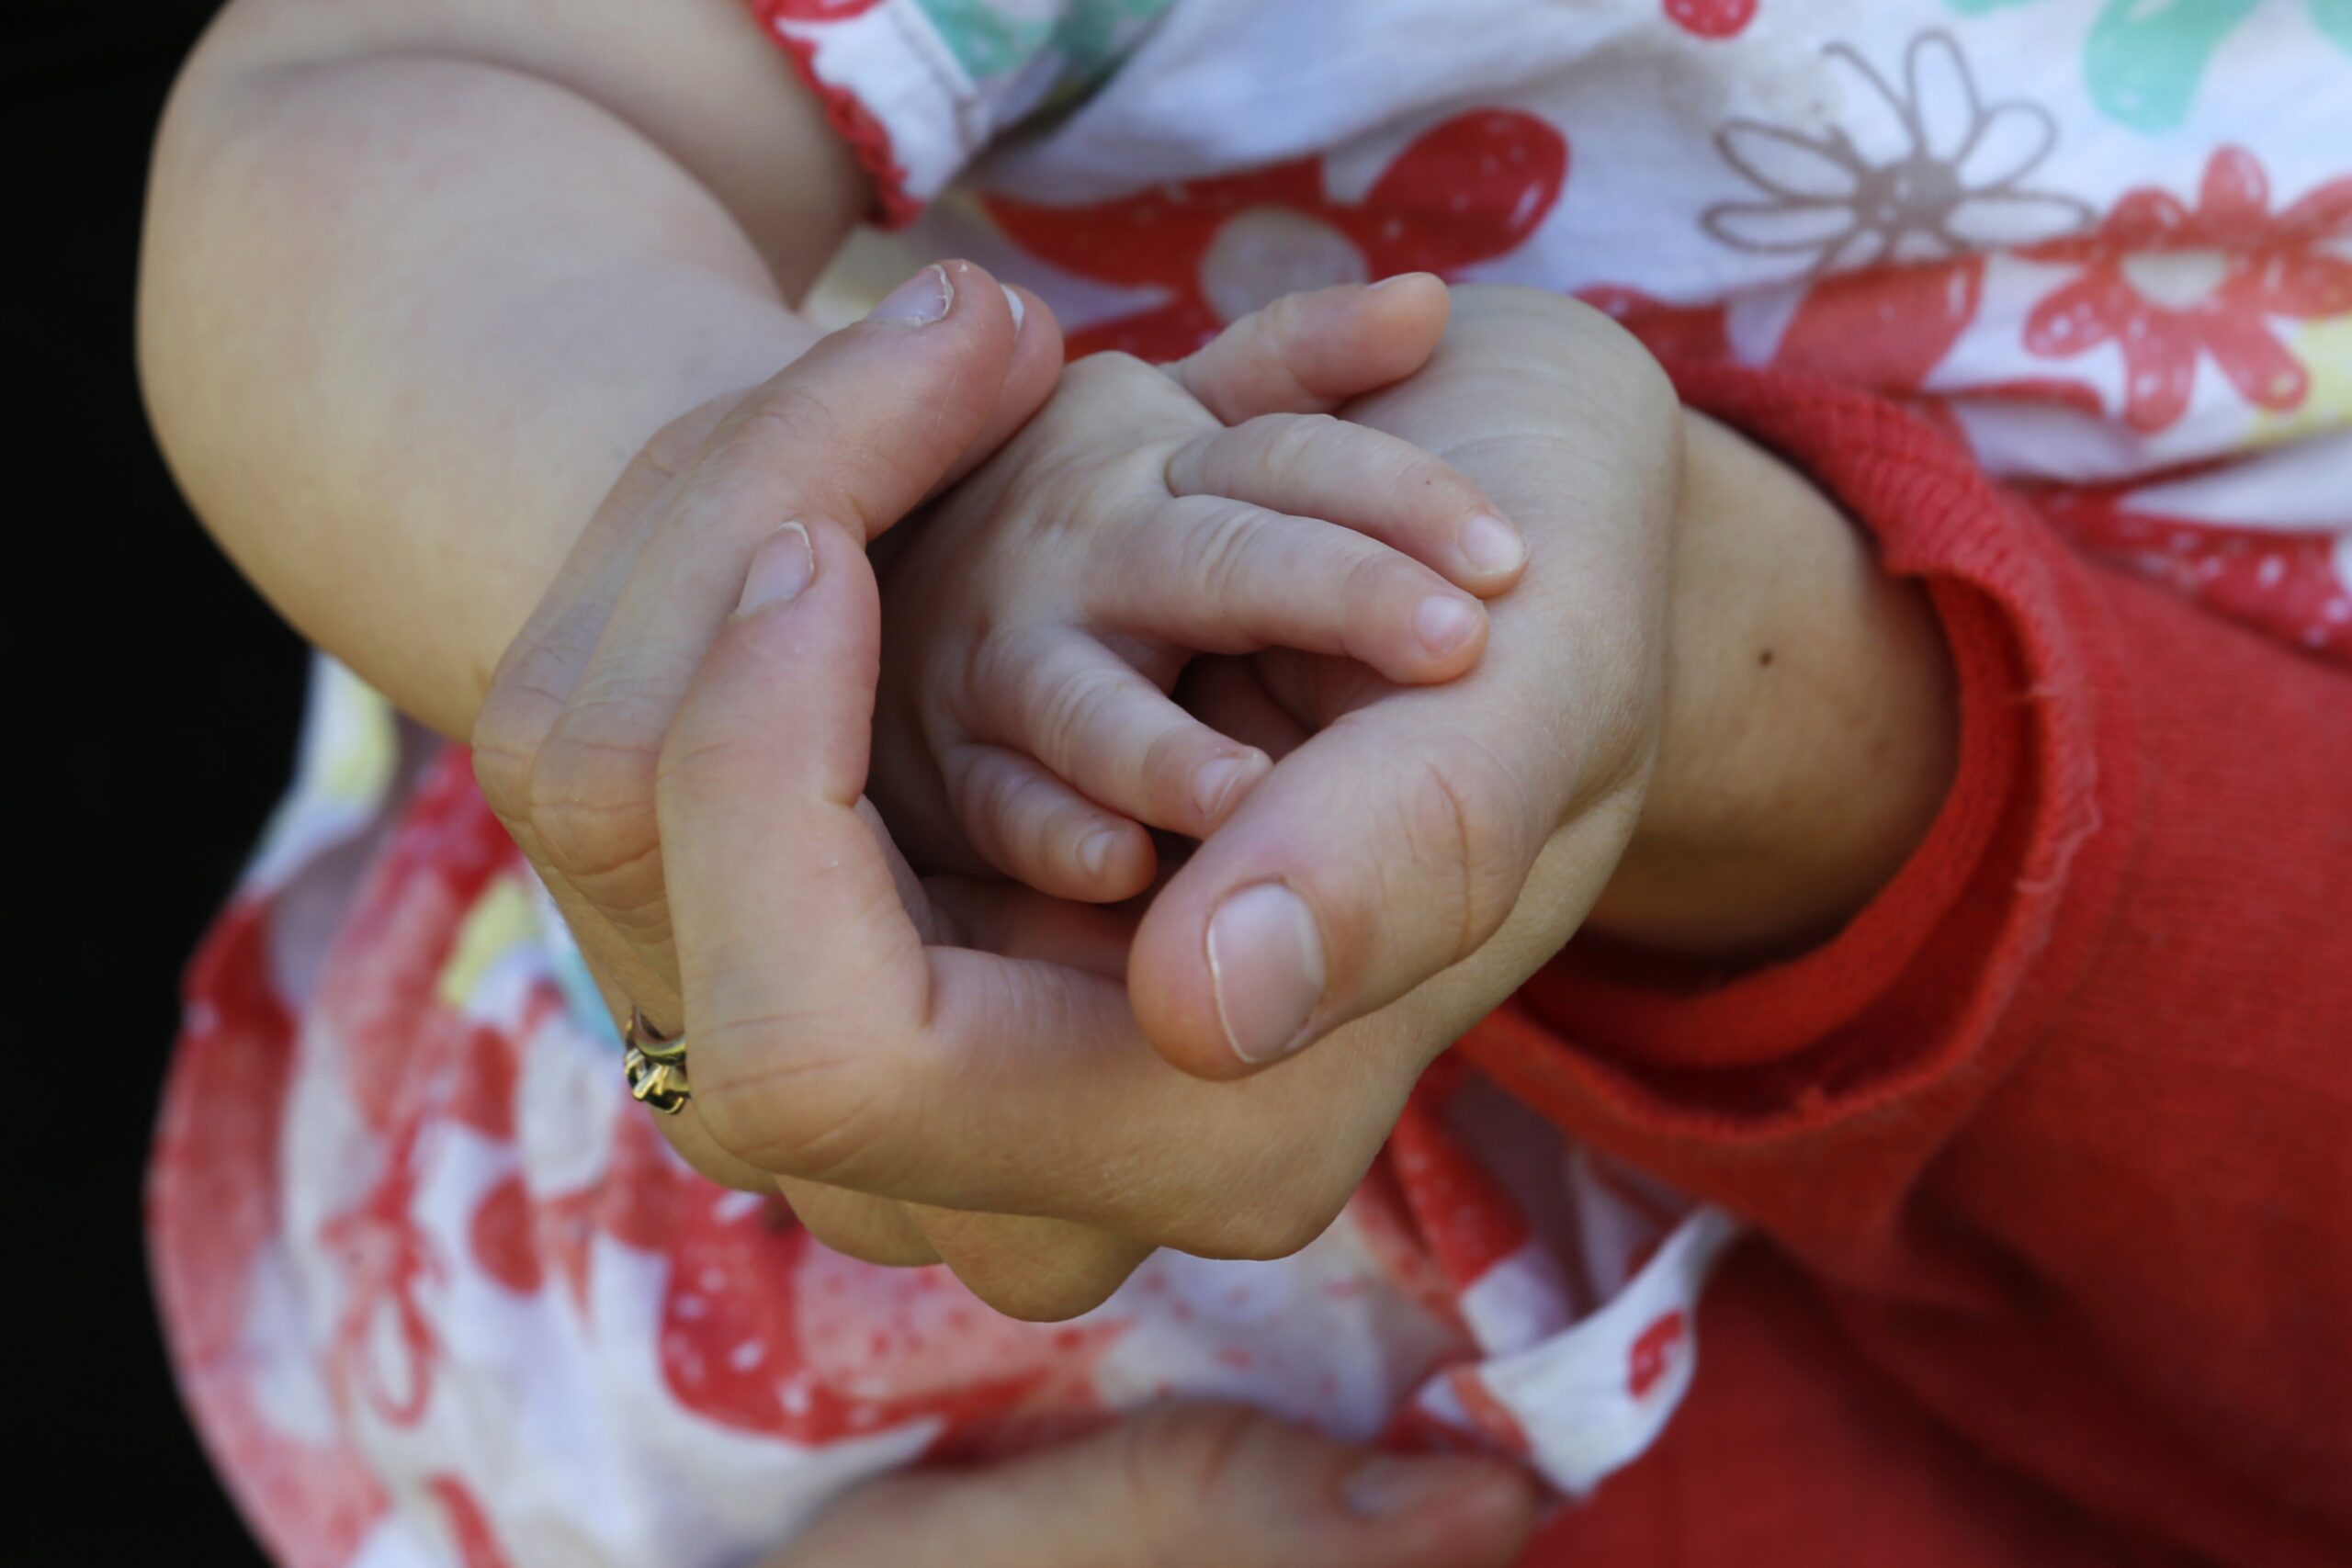 Sara Adelman holds her daughter Amelia's hand